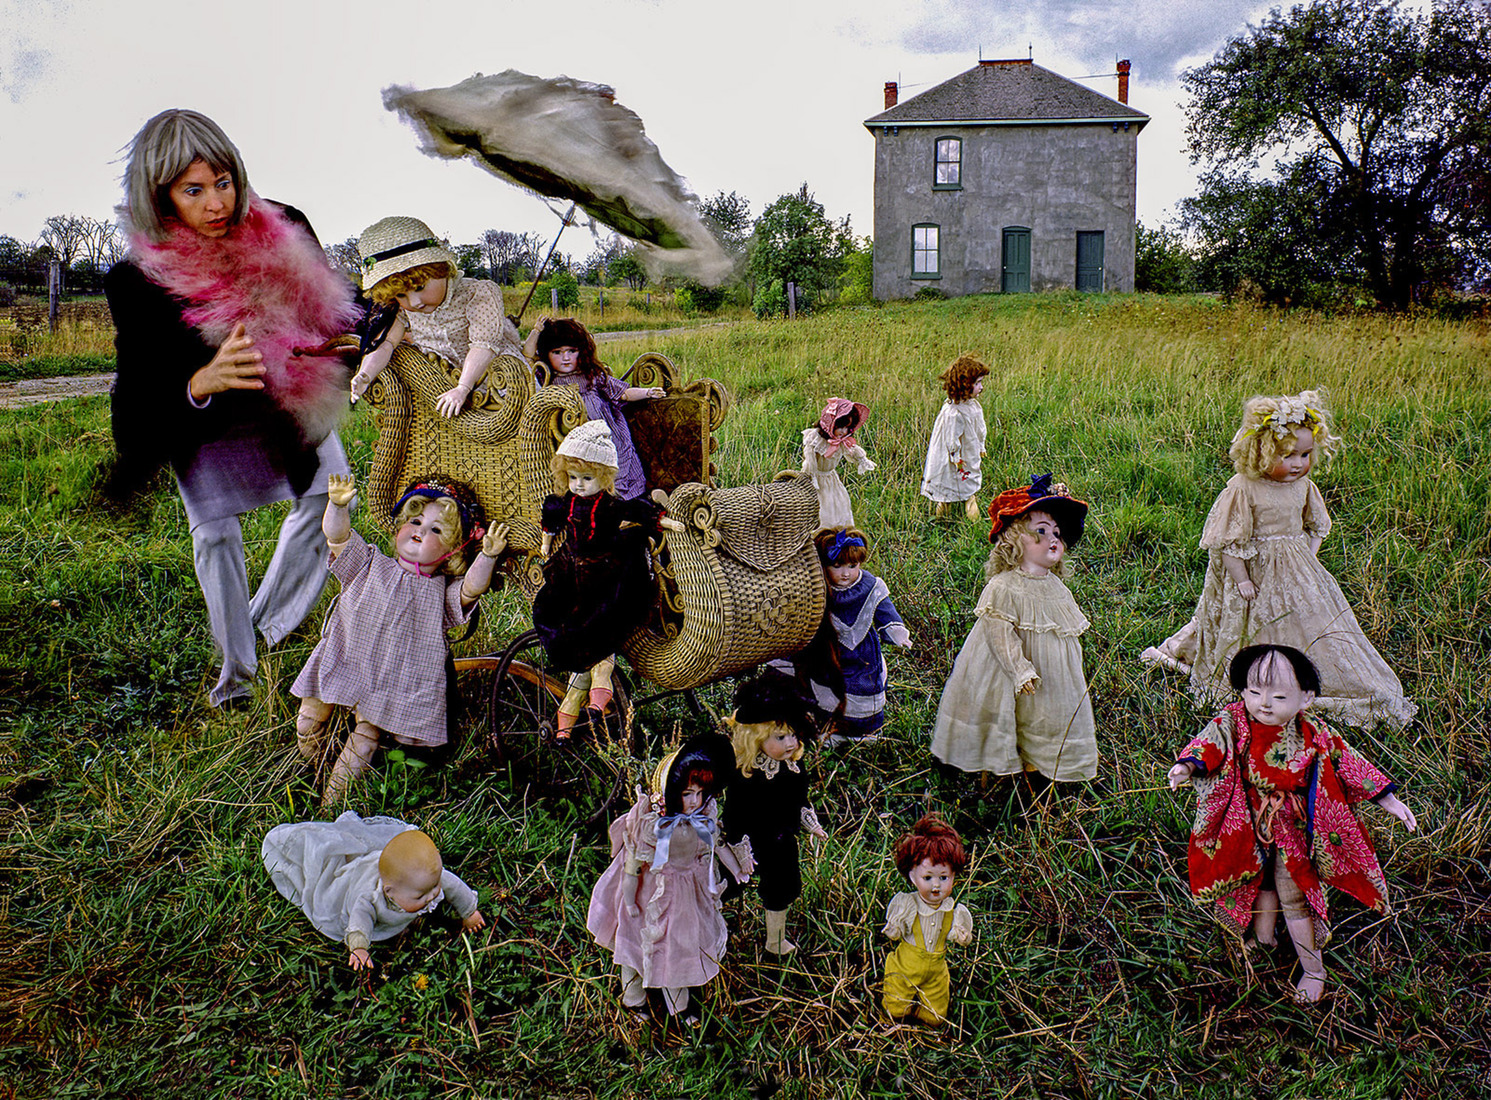 Antique dolls on location